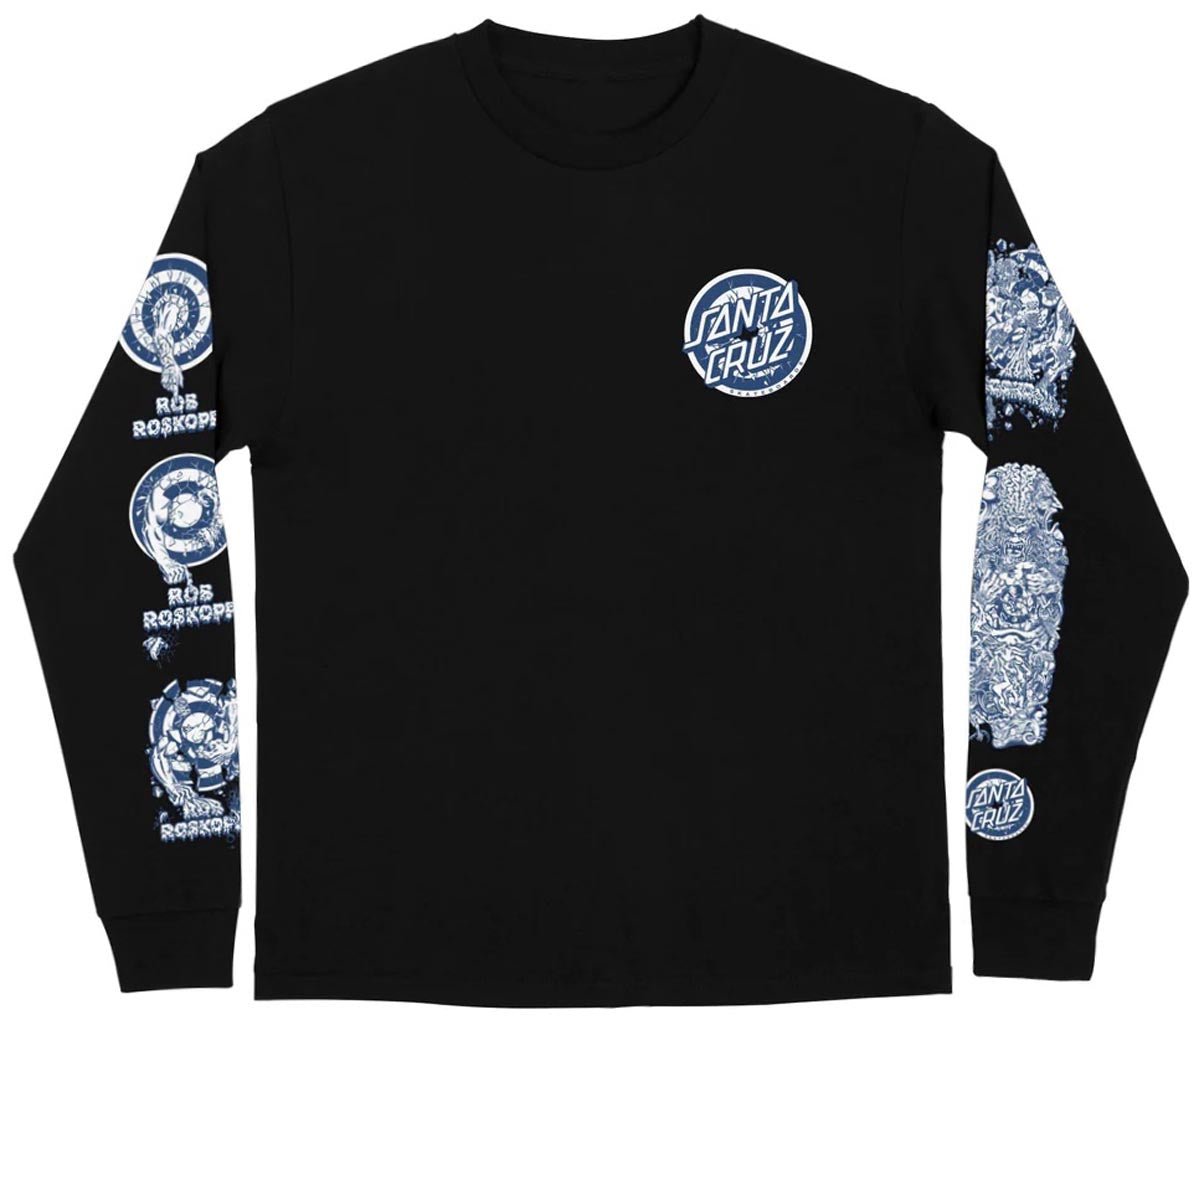 Santa Cruz Rob Evolution Long Sleeve T-Shirt - Black/Blue image 1